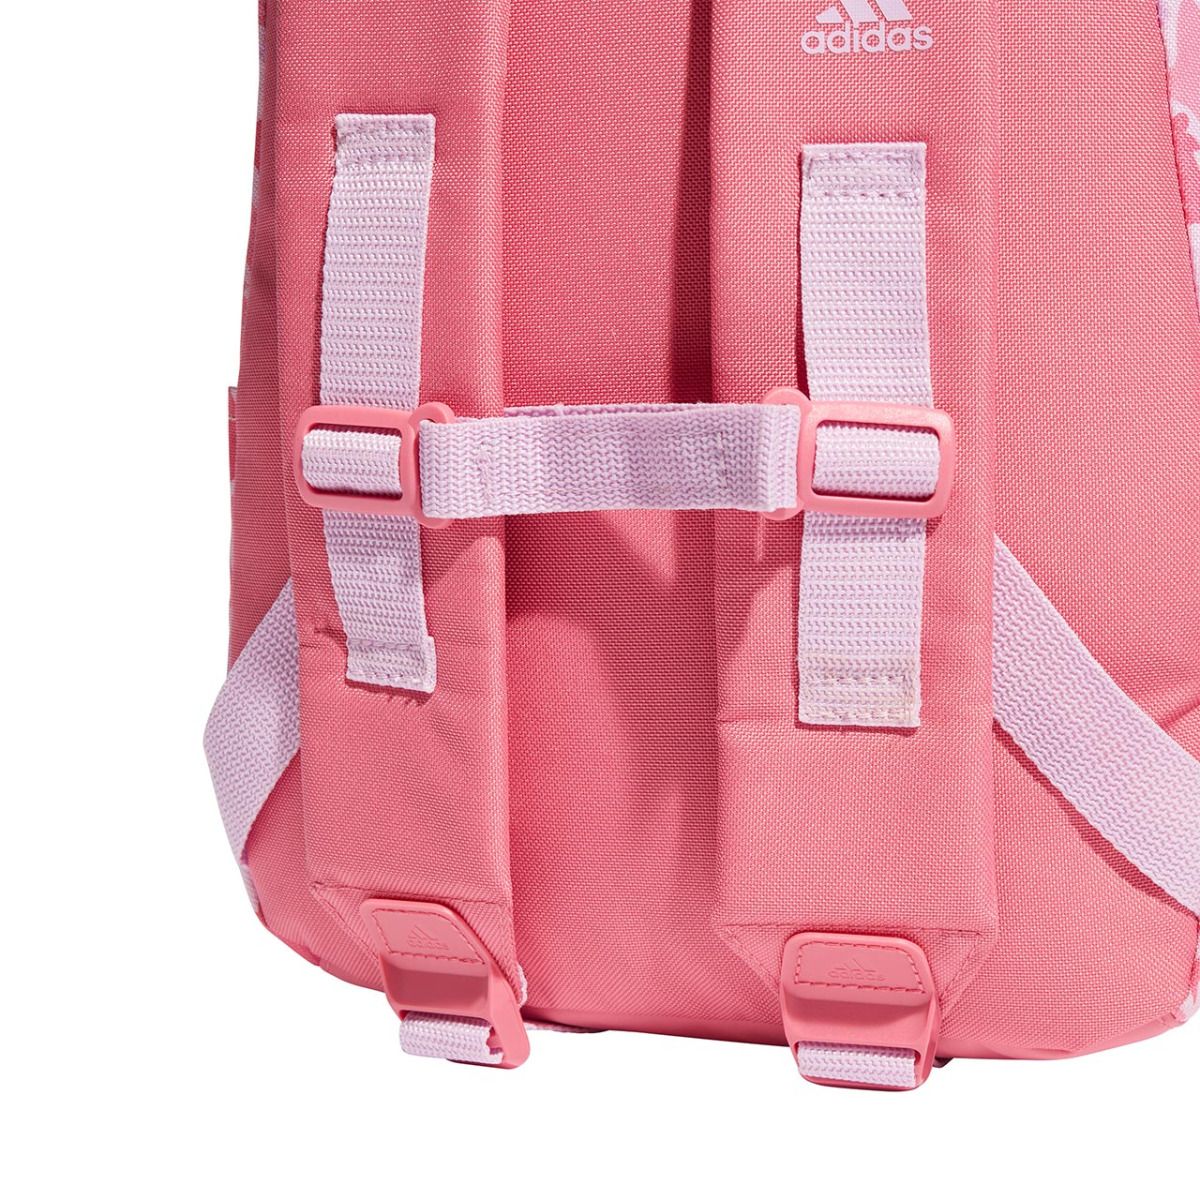 adidas Batoh Printed Backpack IS0923